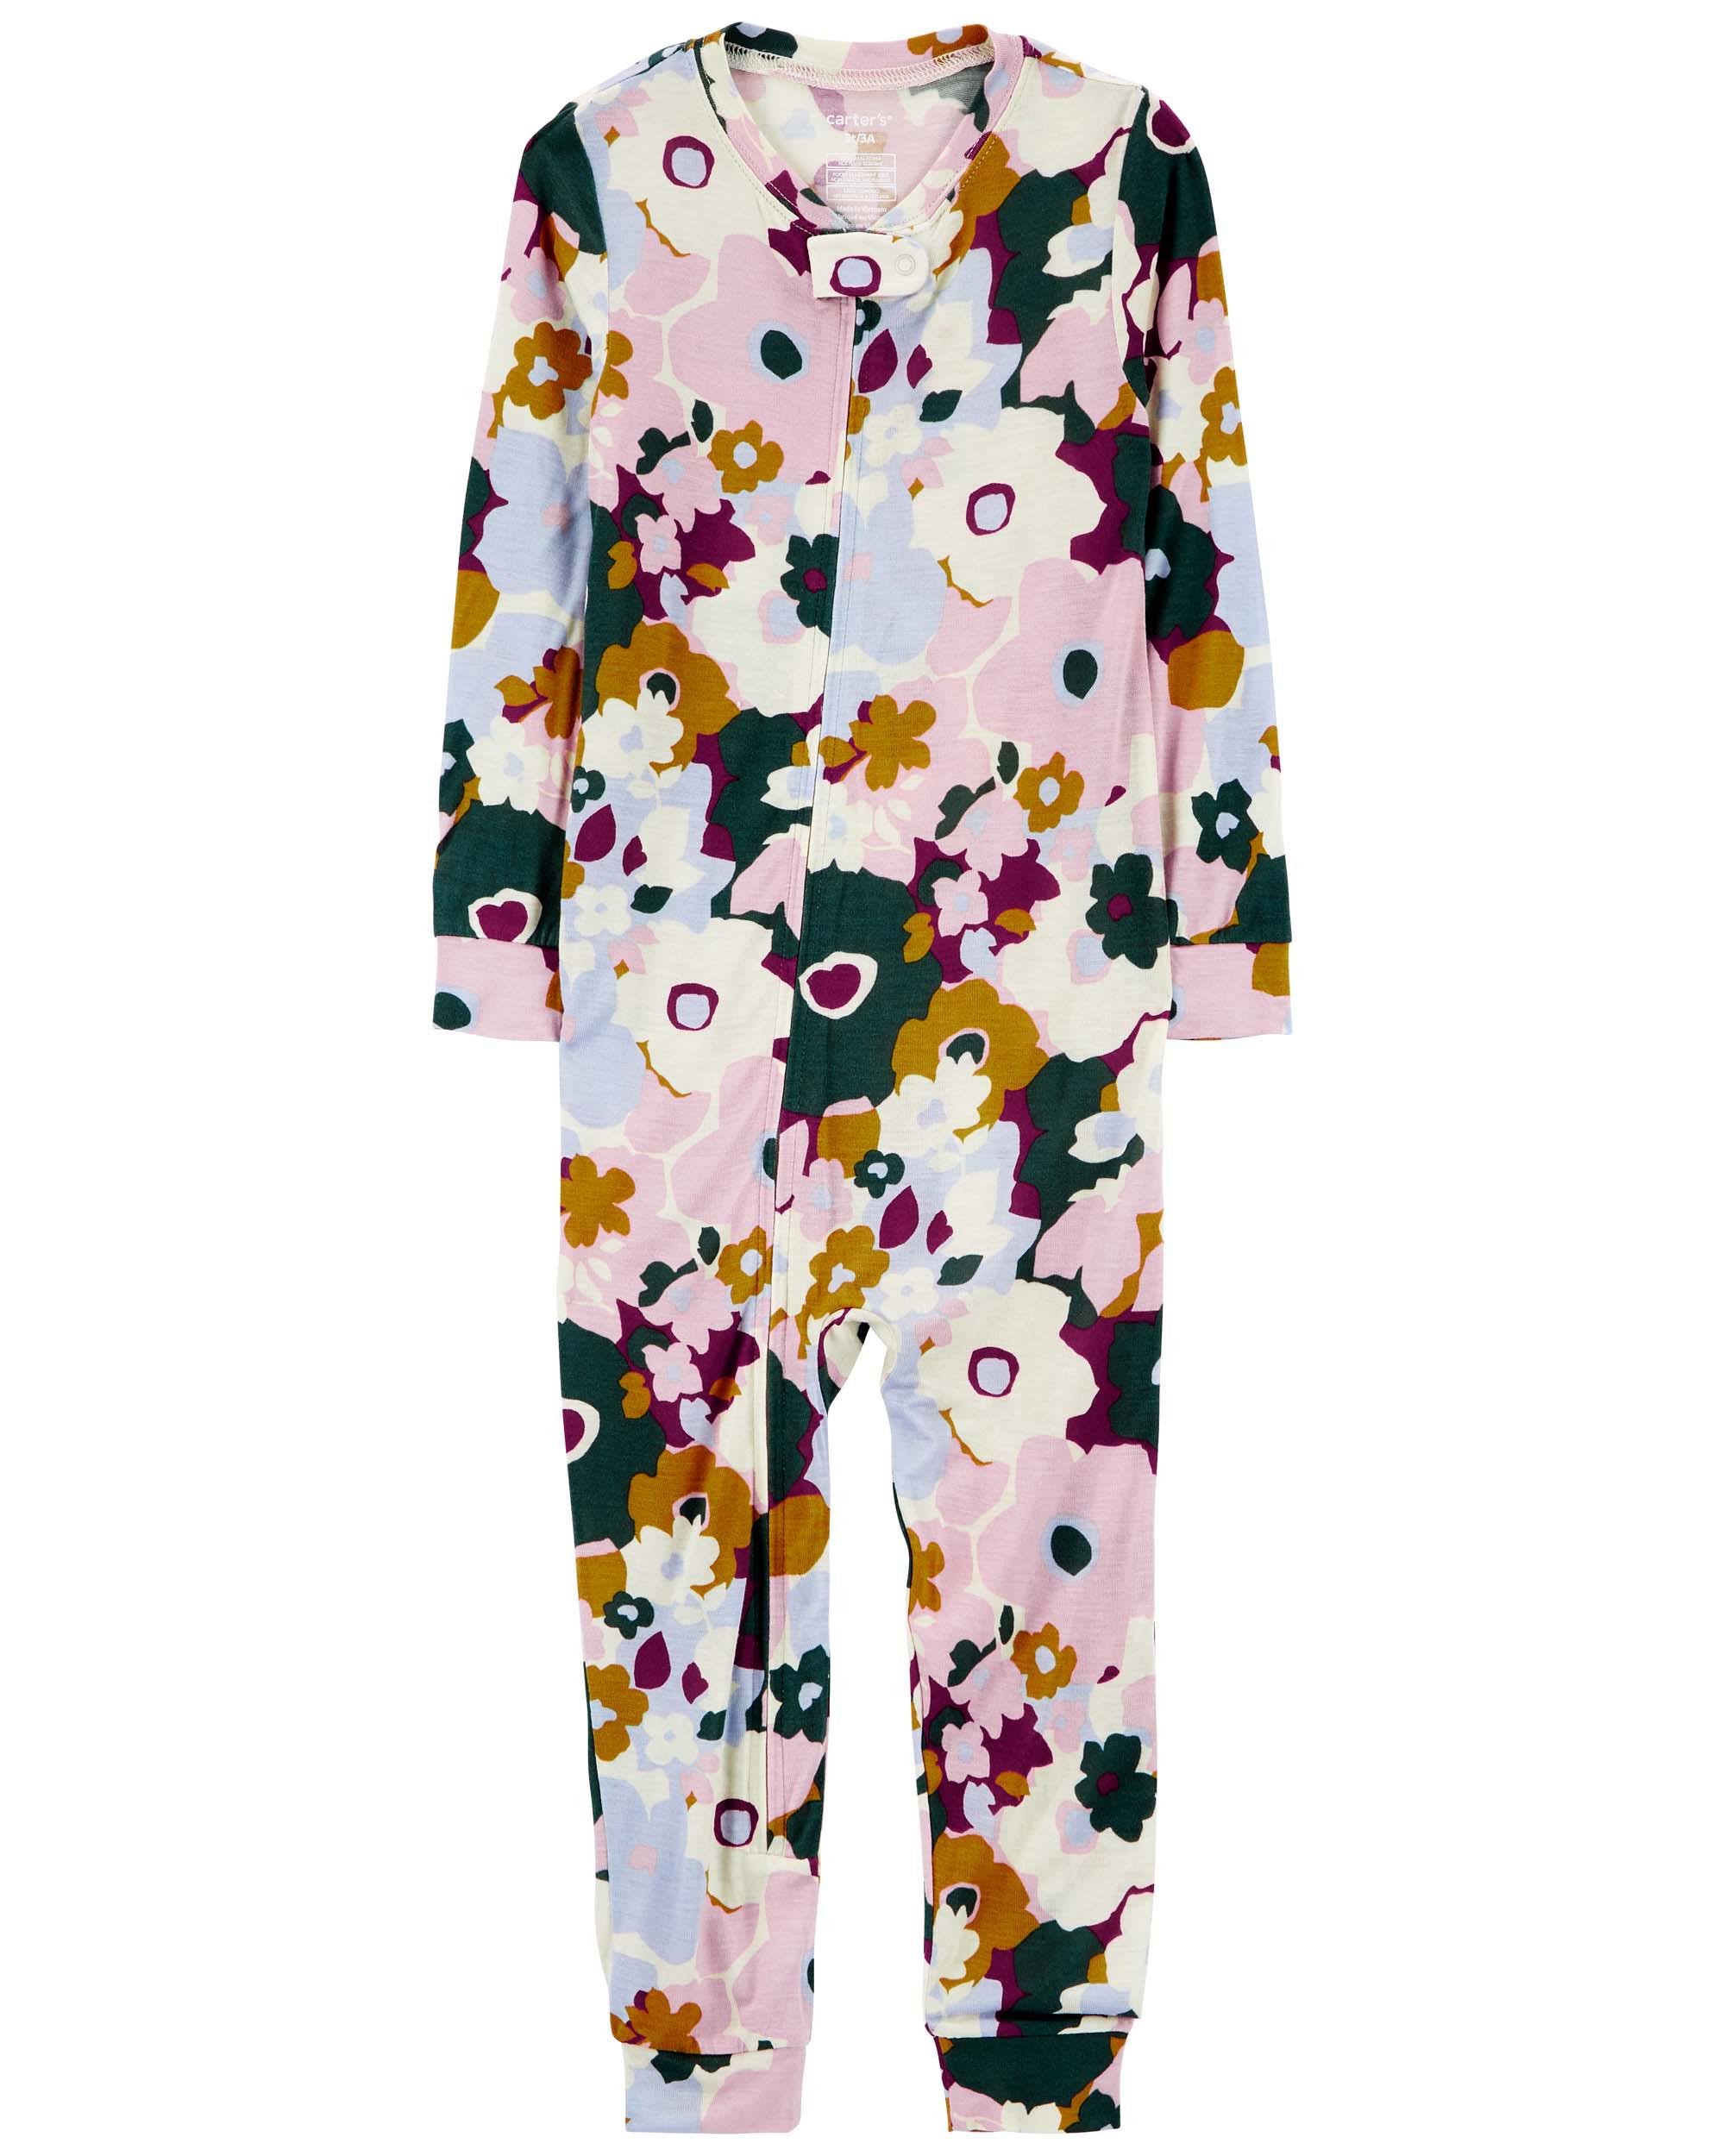 Toddler 1-Piece PurelySoft Floral Print Pyjamas